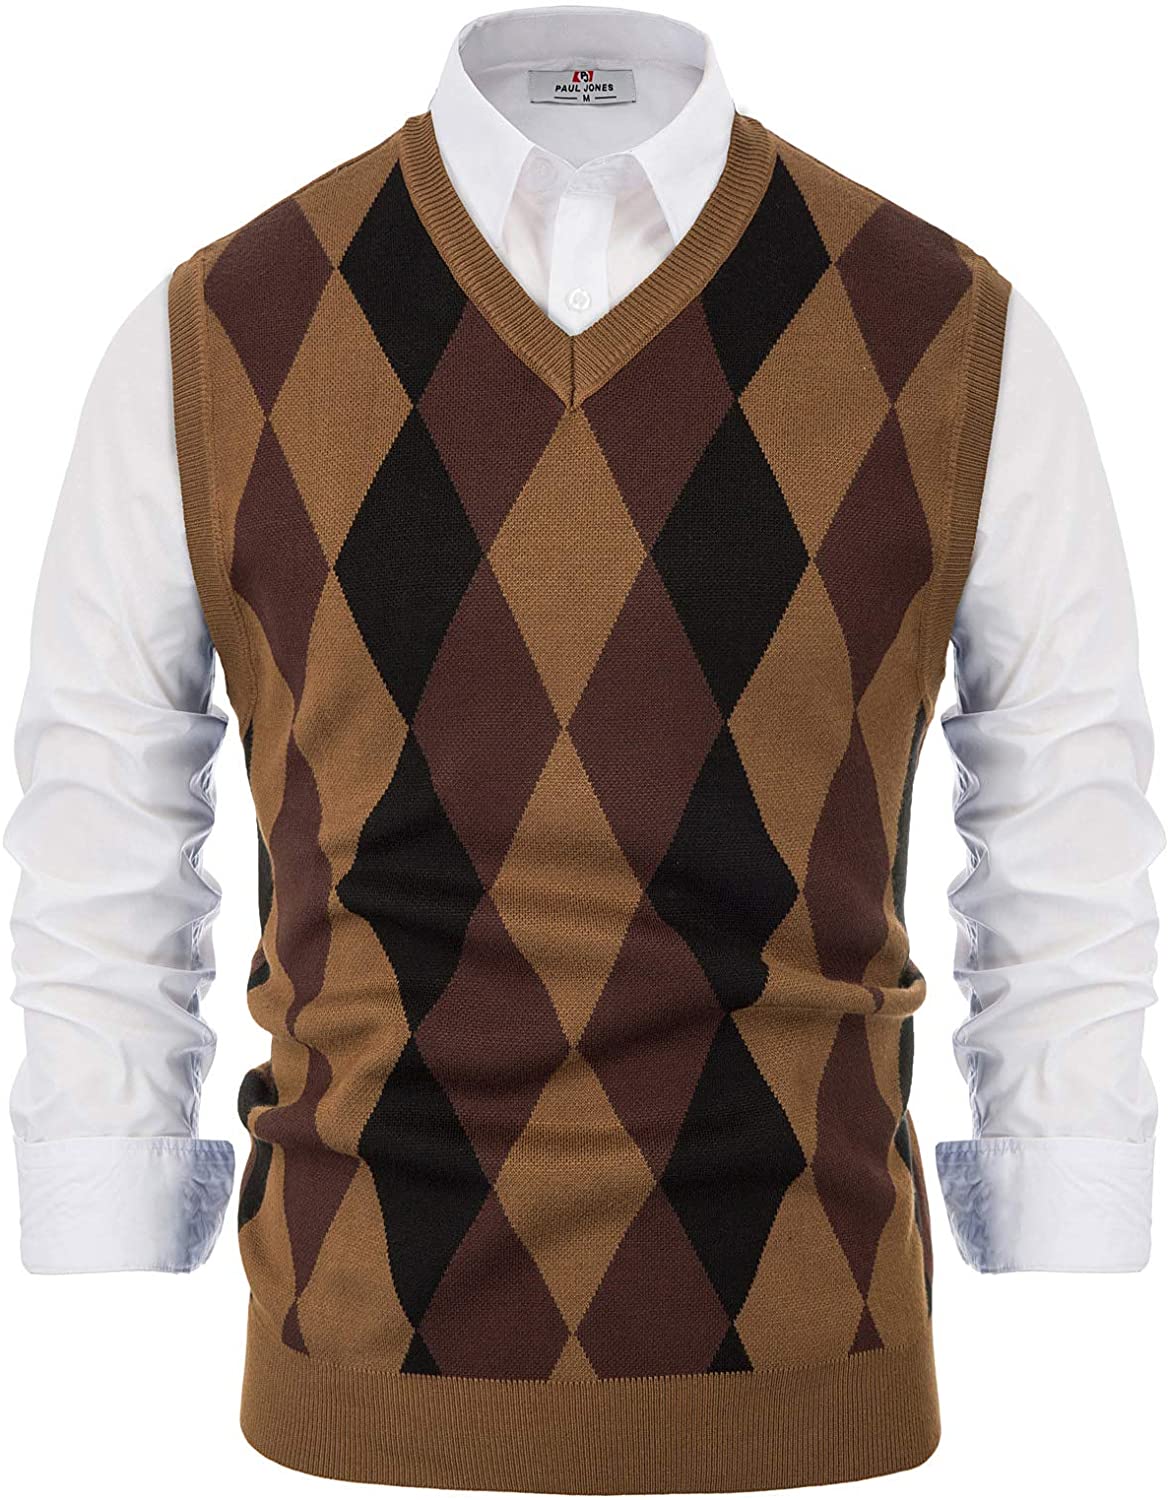 PJ PAUL JONES Mens Argyle Sweater Vest Knitted Casual V-Neck Pullover Vest